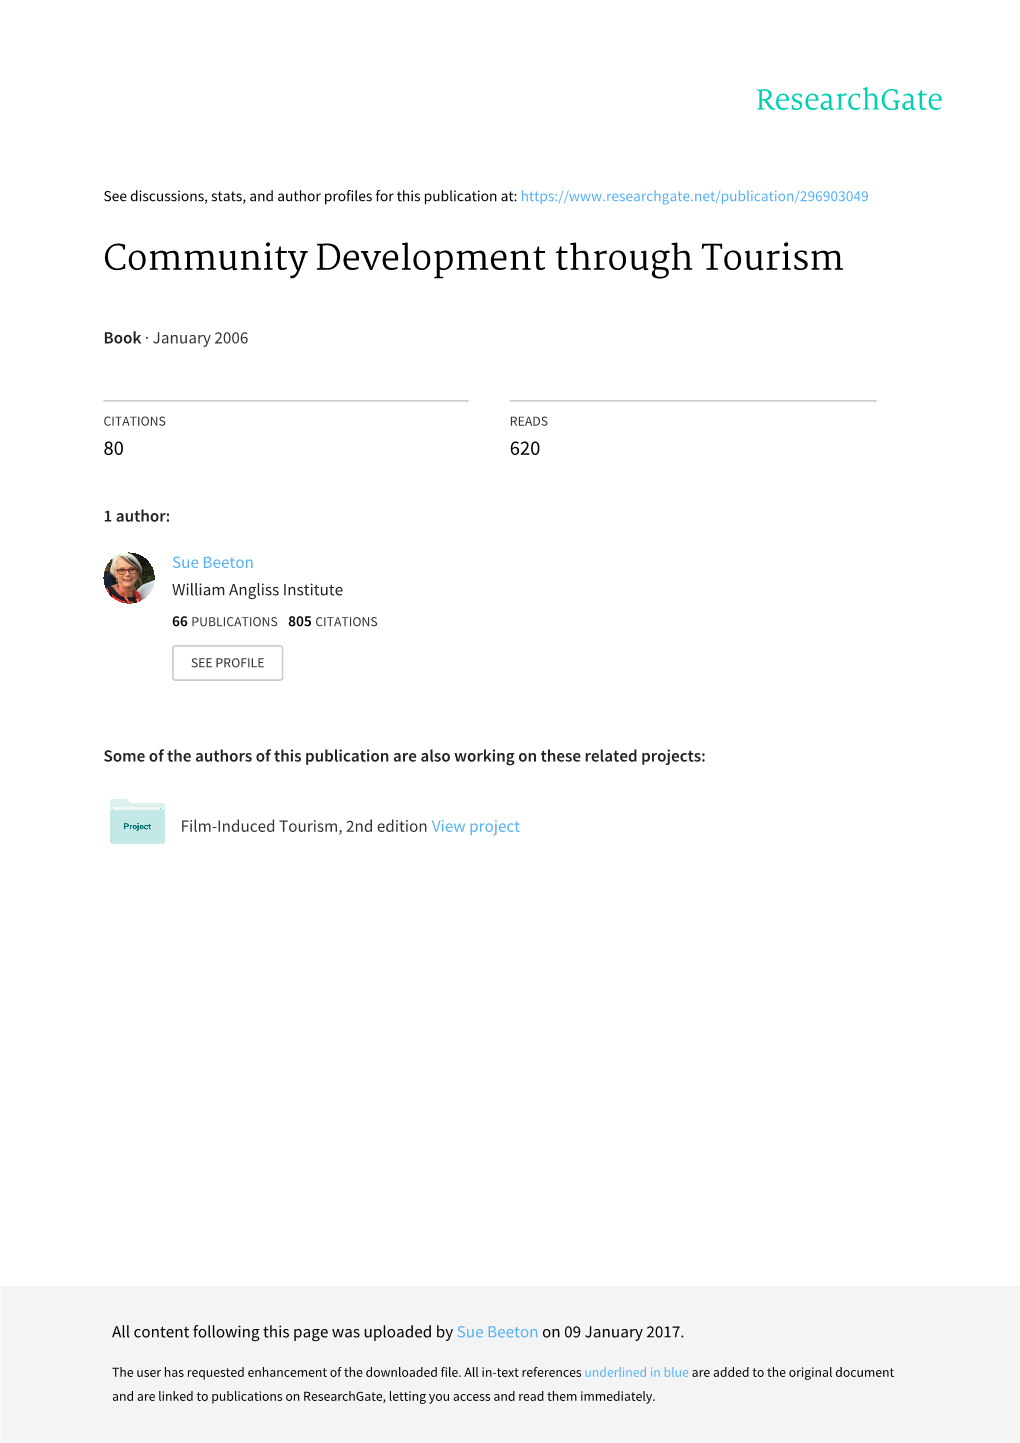 Community Development Through Tourism